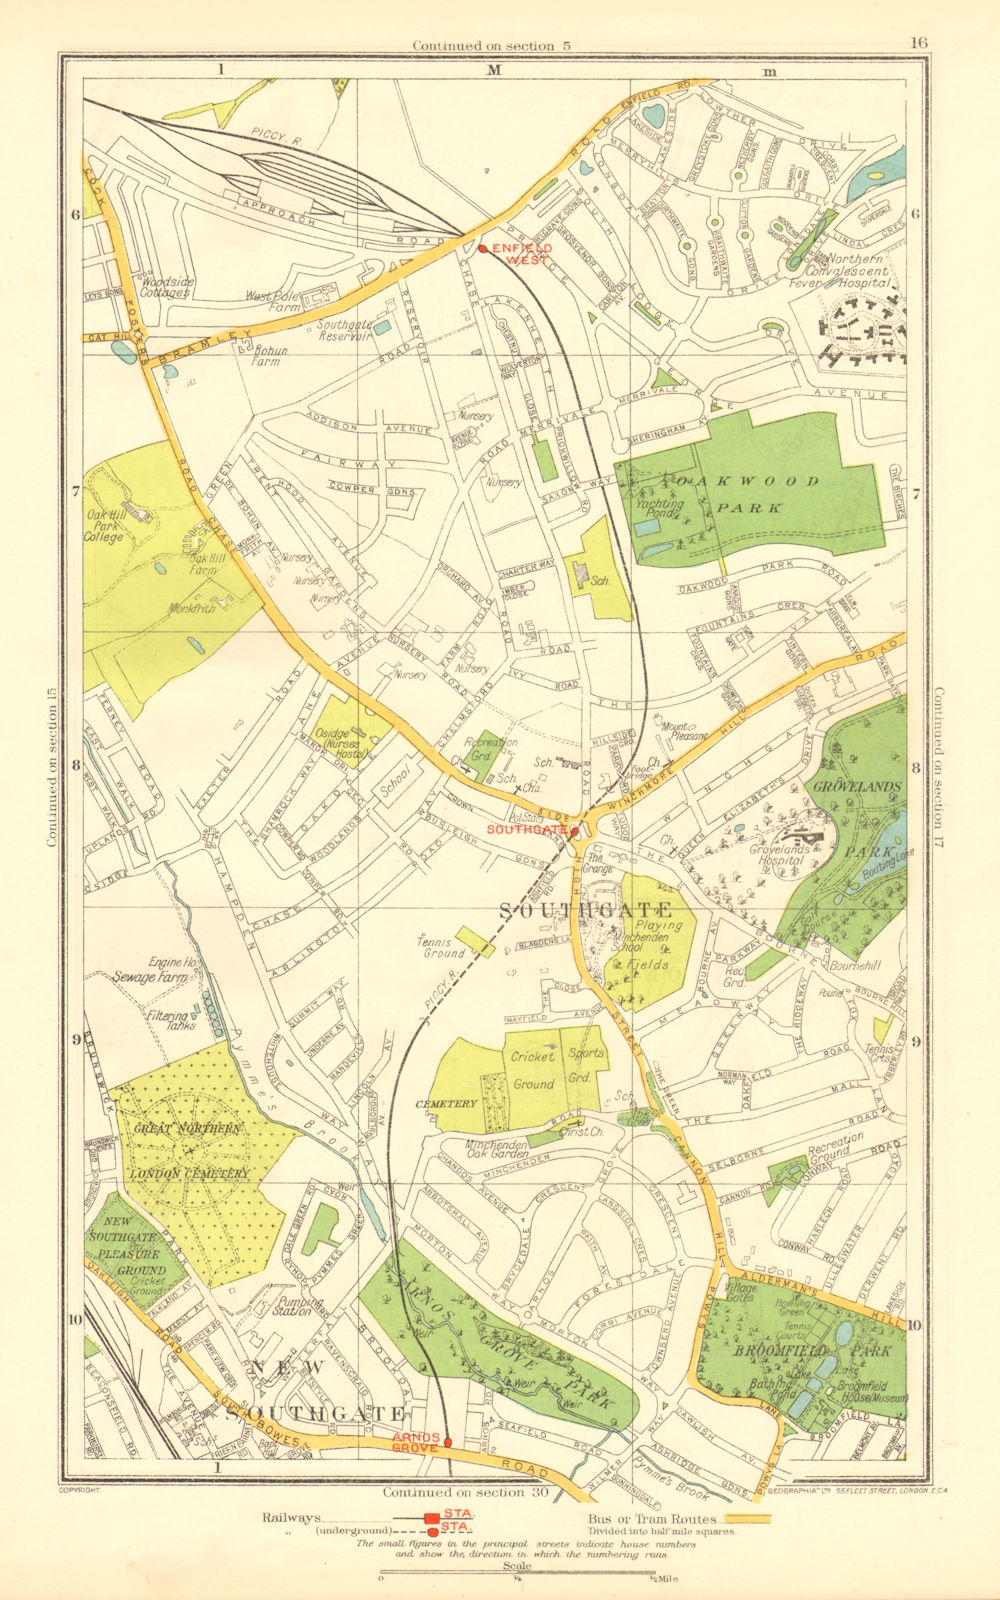 LONDON. Southgate New Southgate Arnos Grove West Enfield 1937 old vintage map